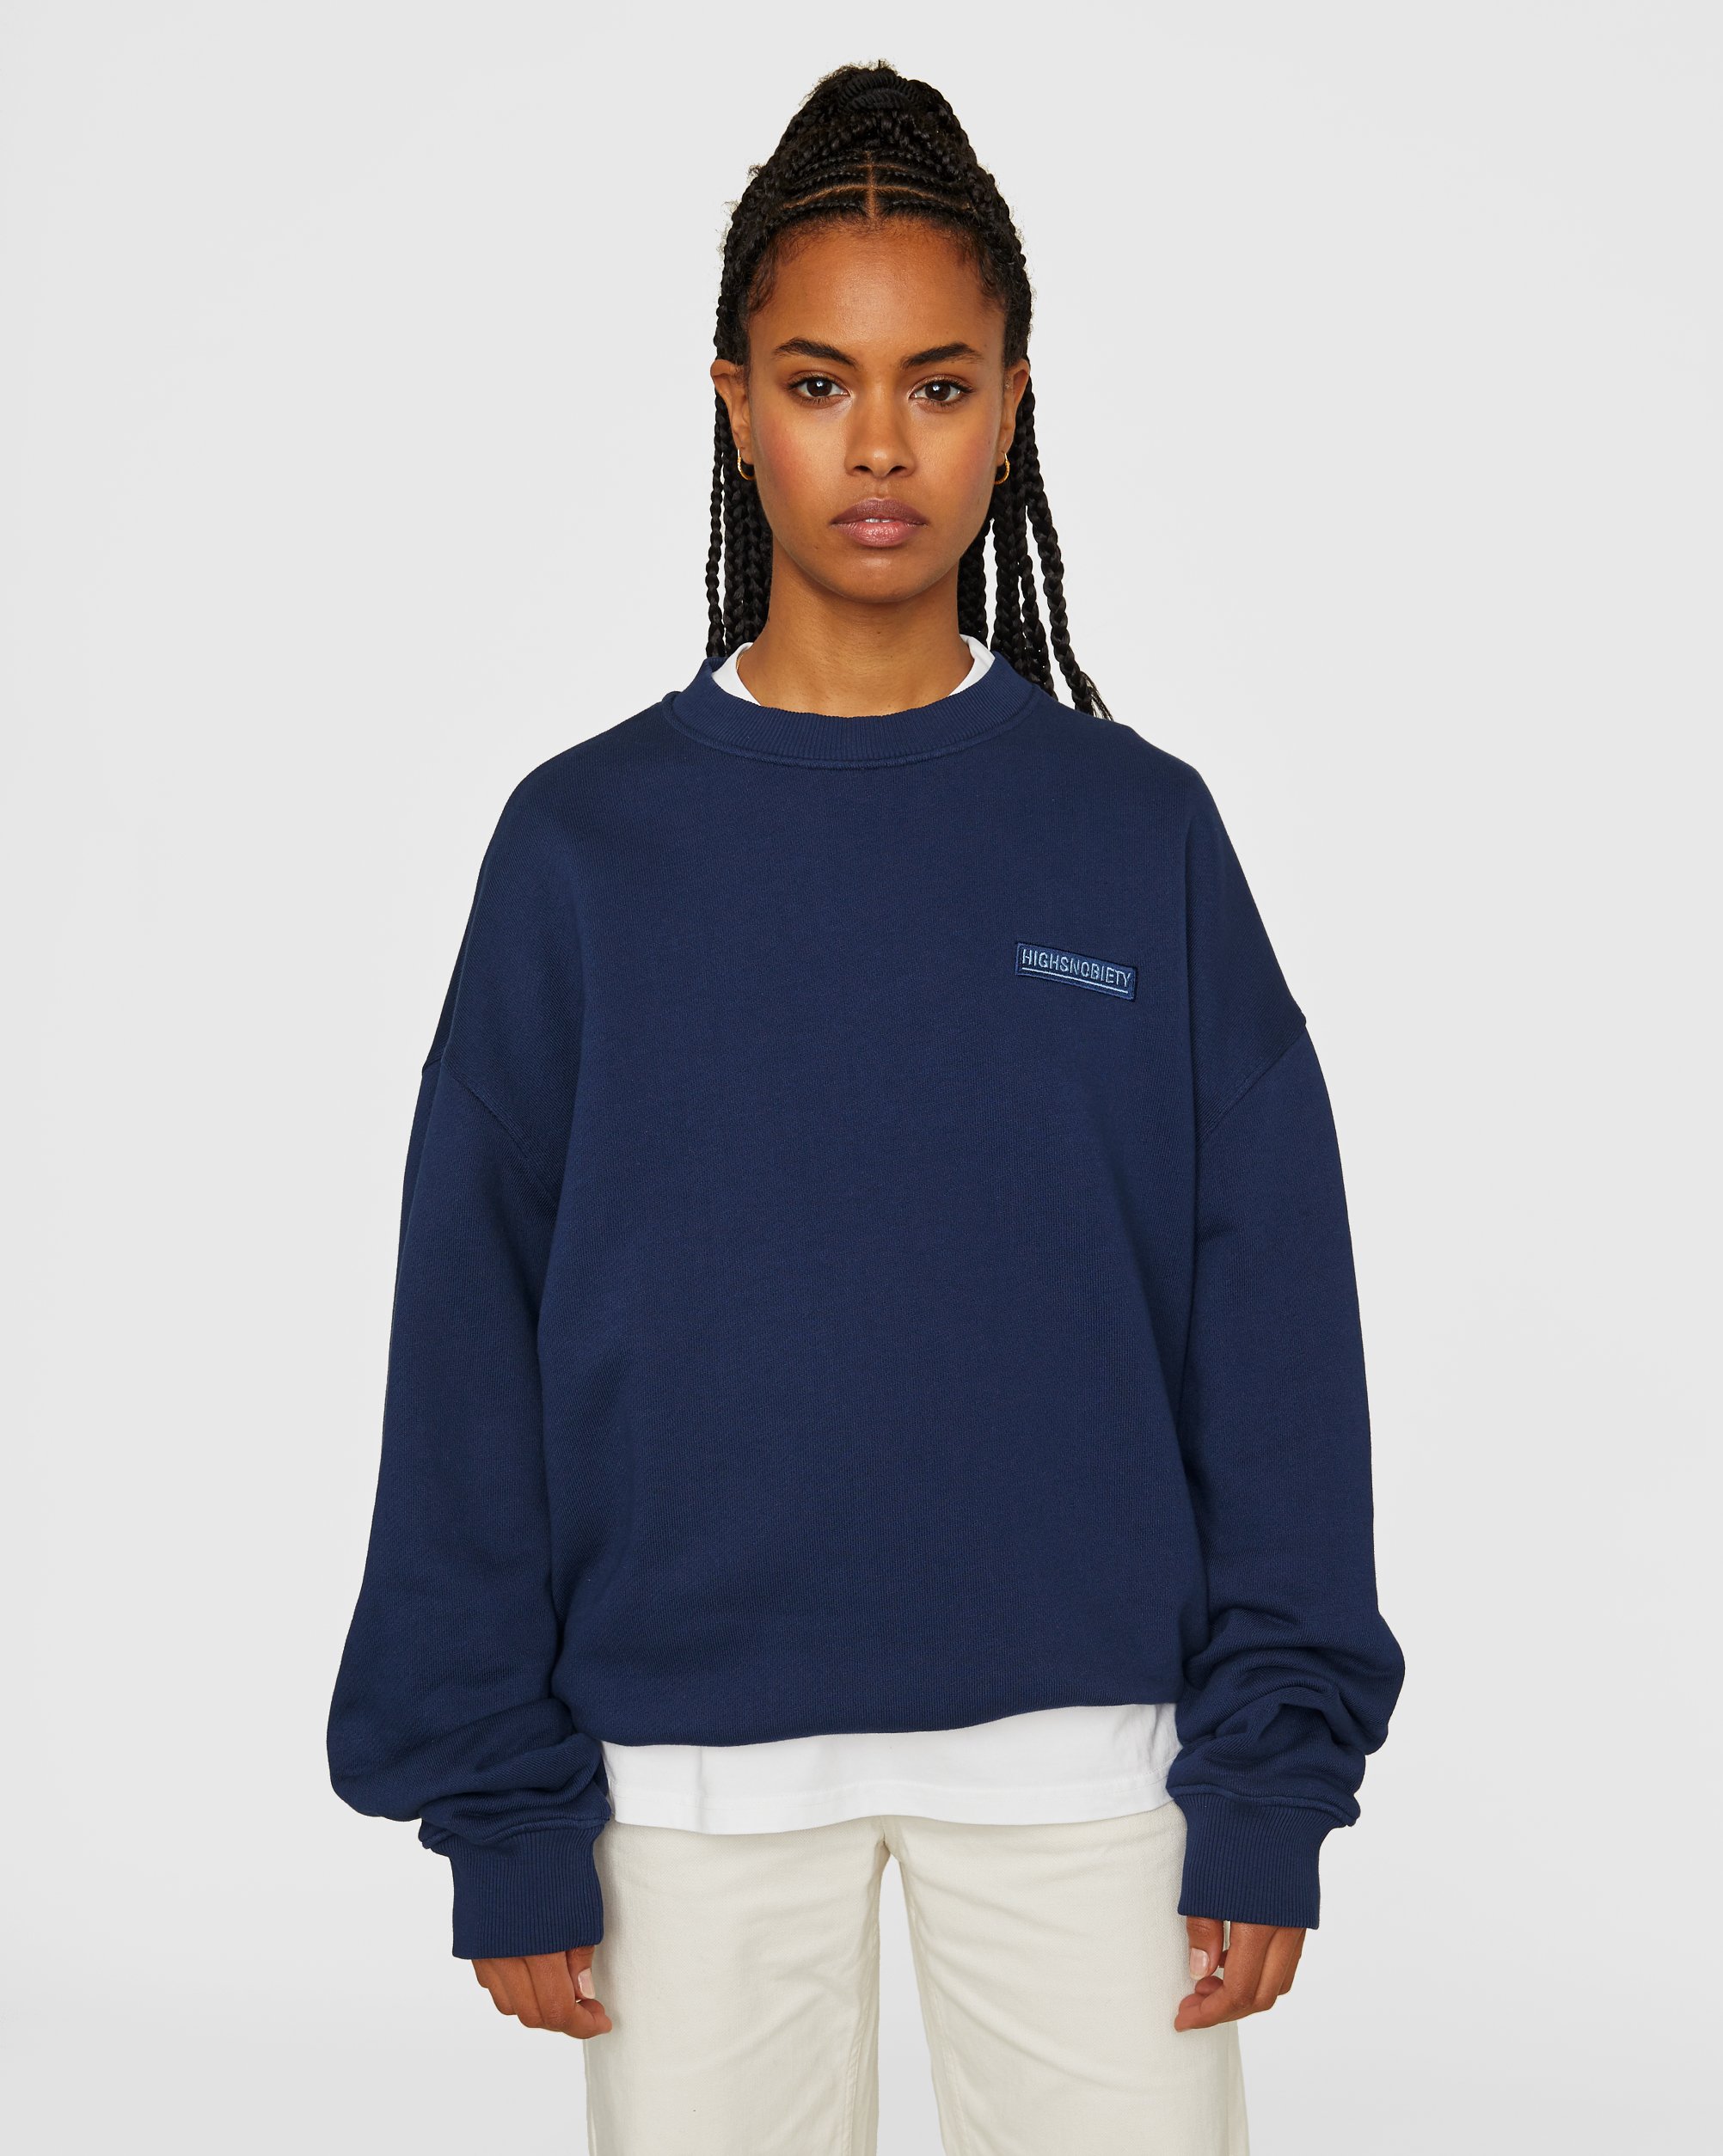 Highsnobiety - Staples Sweatshirt Navy - Clothing - Blue - Image 6